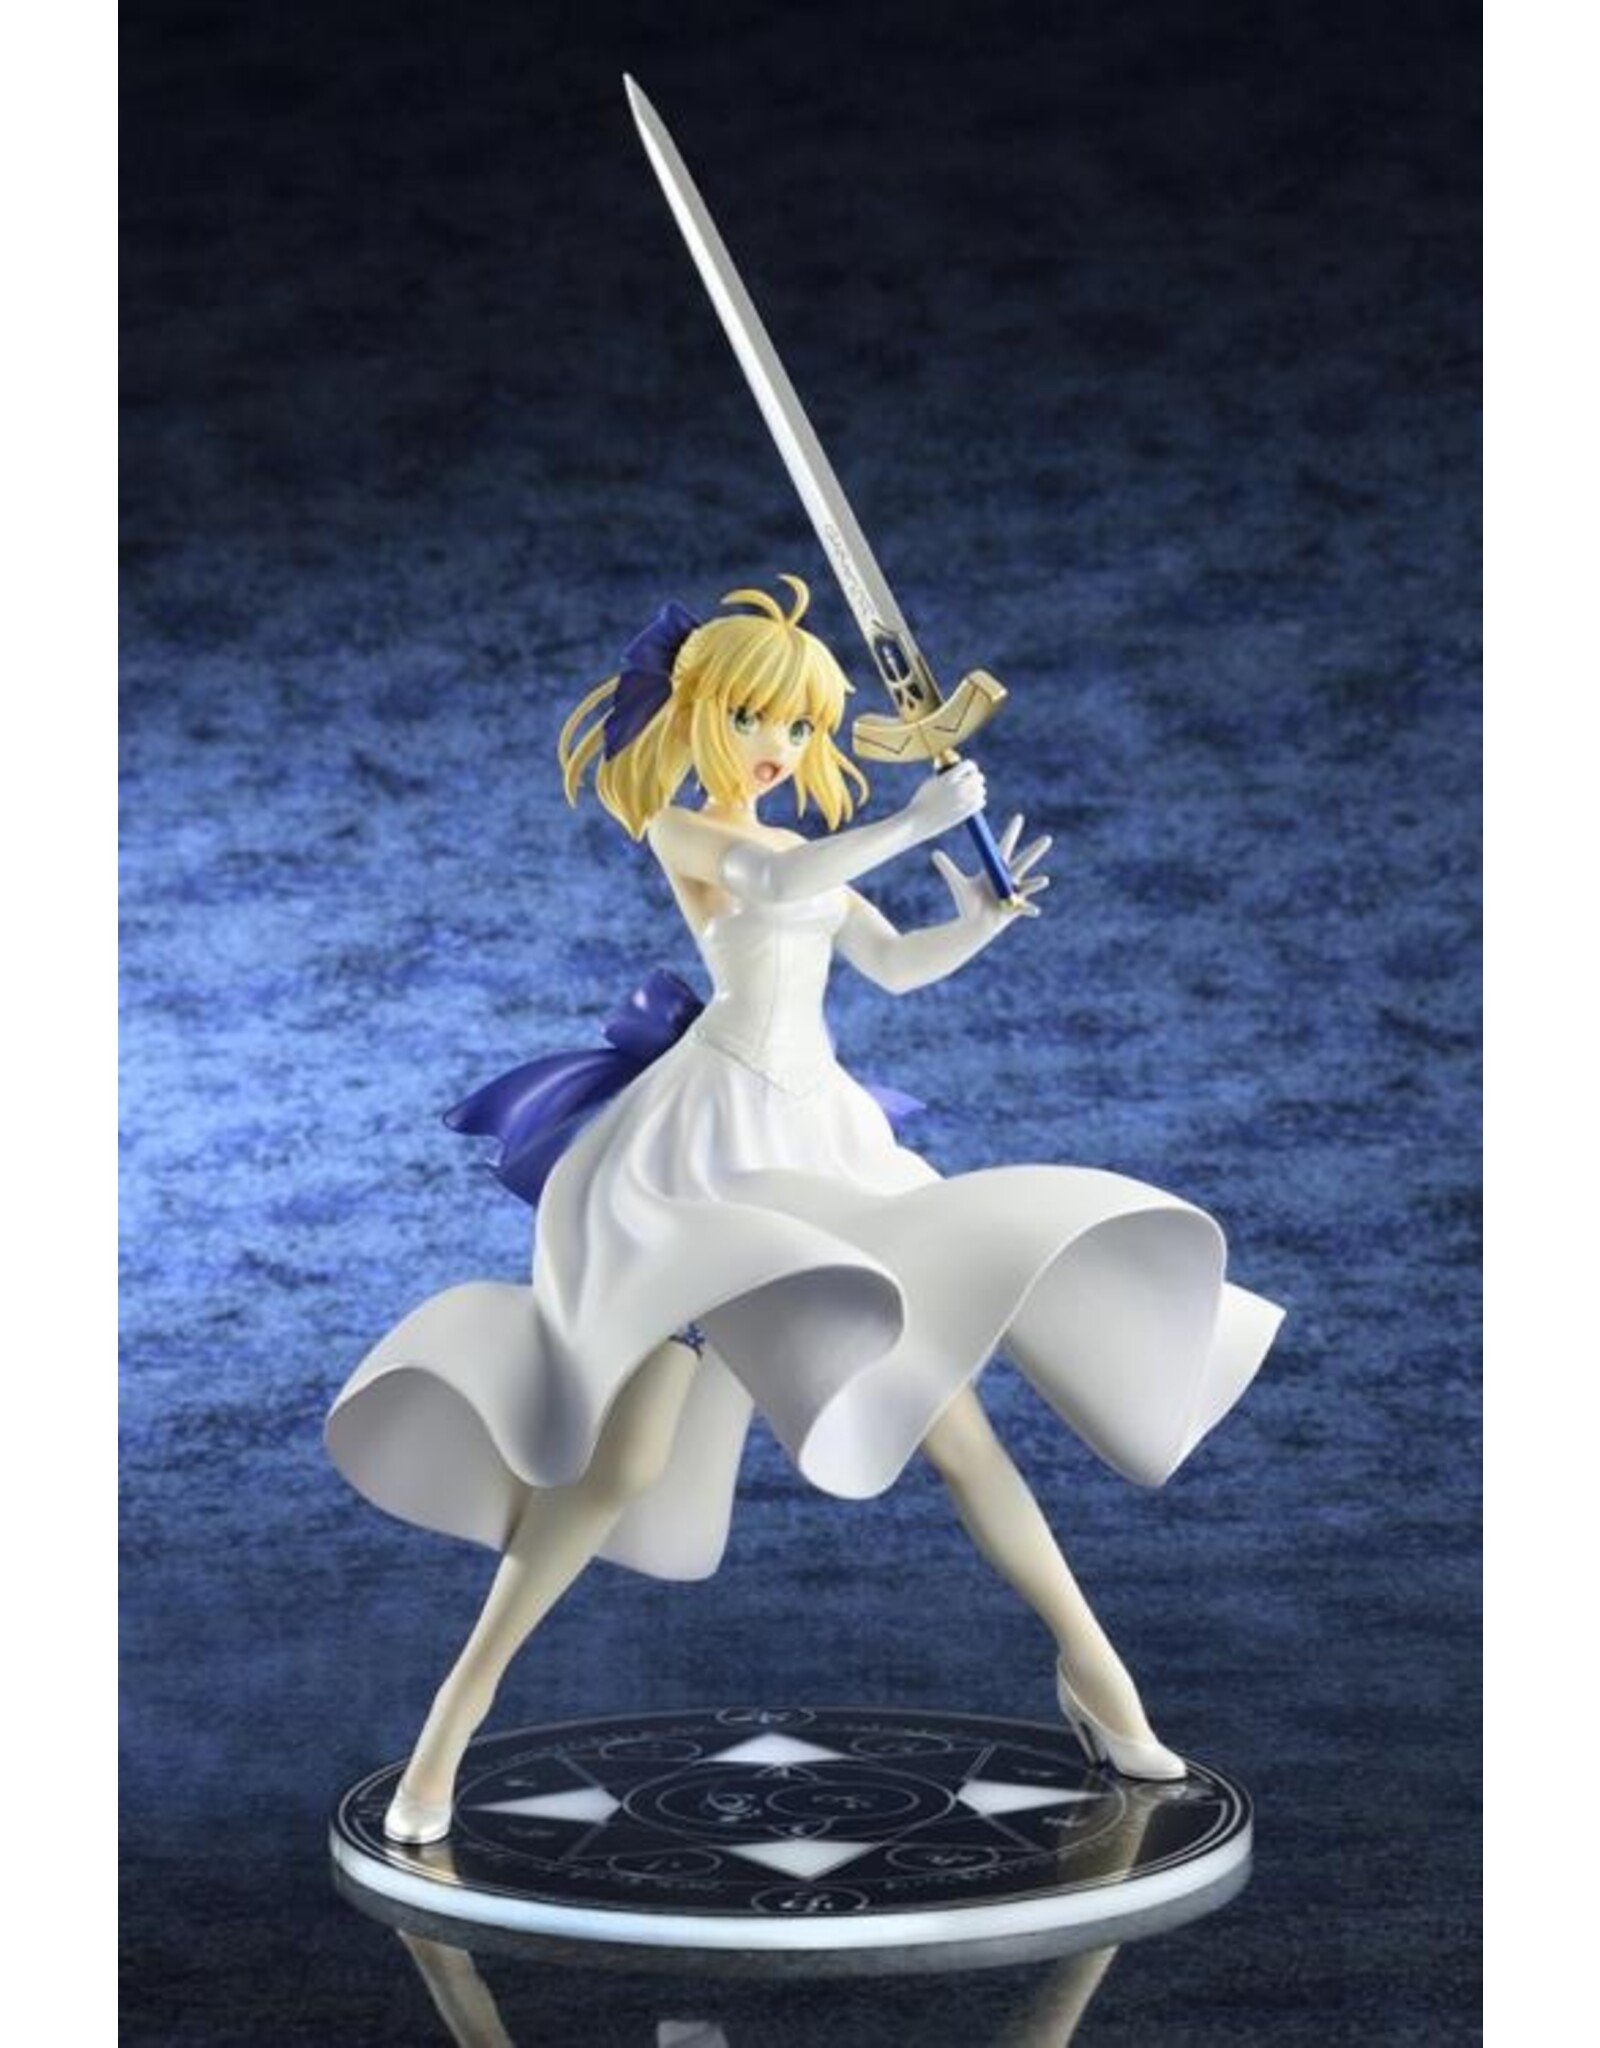 Fate/Stay Nigh UBW Saber White Dress 1/8 Scale Figure